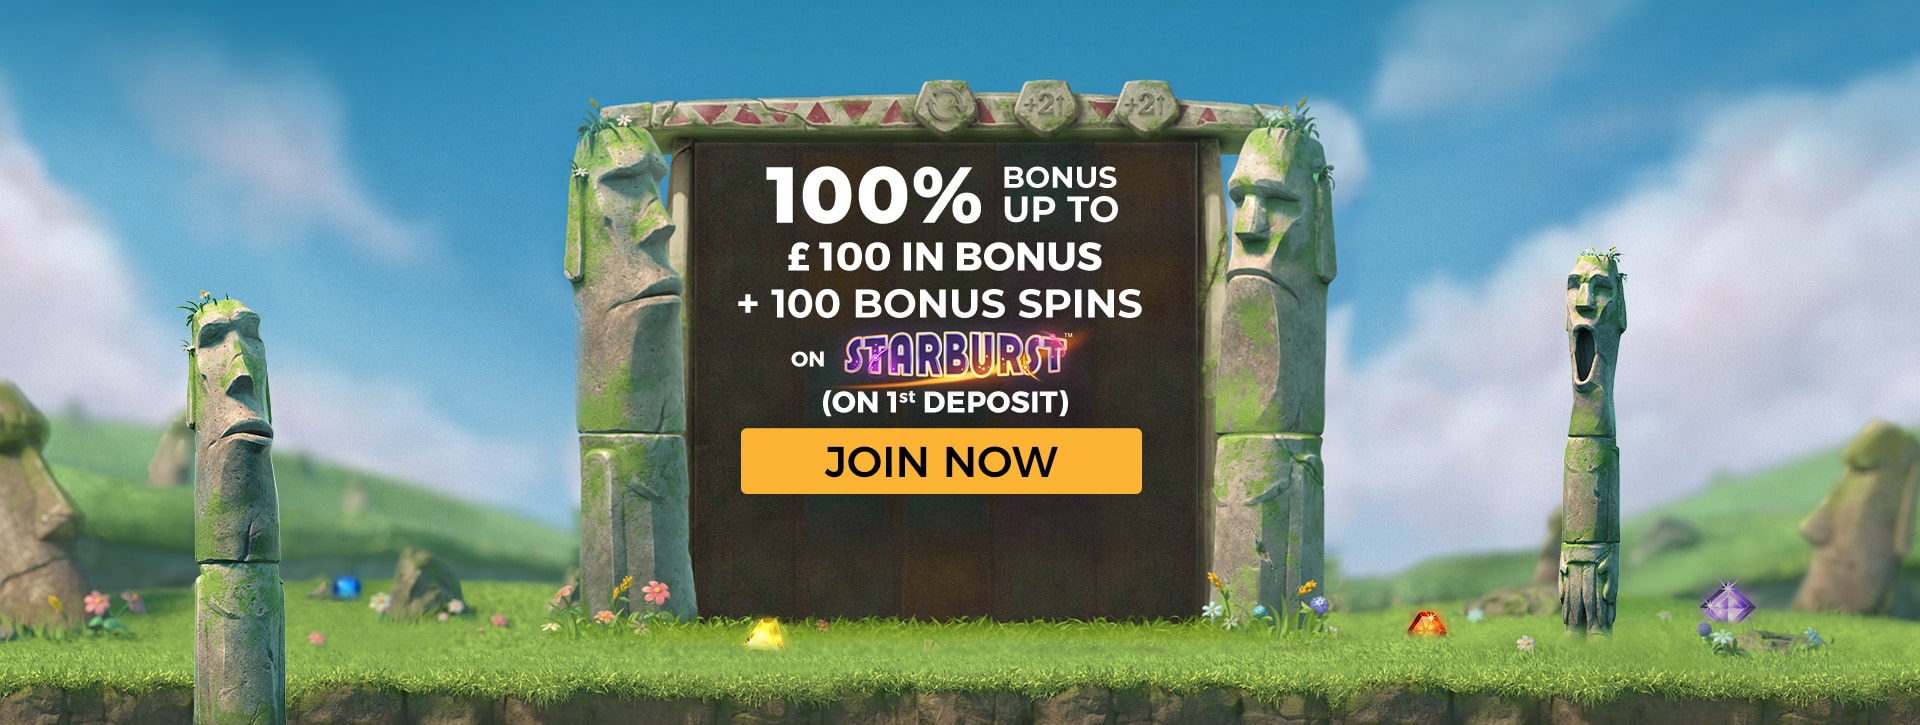 PlayUK Casino Bonus Offer